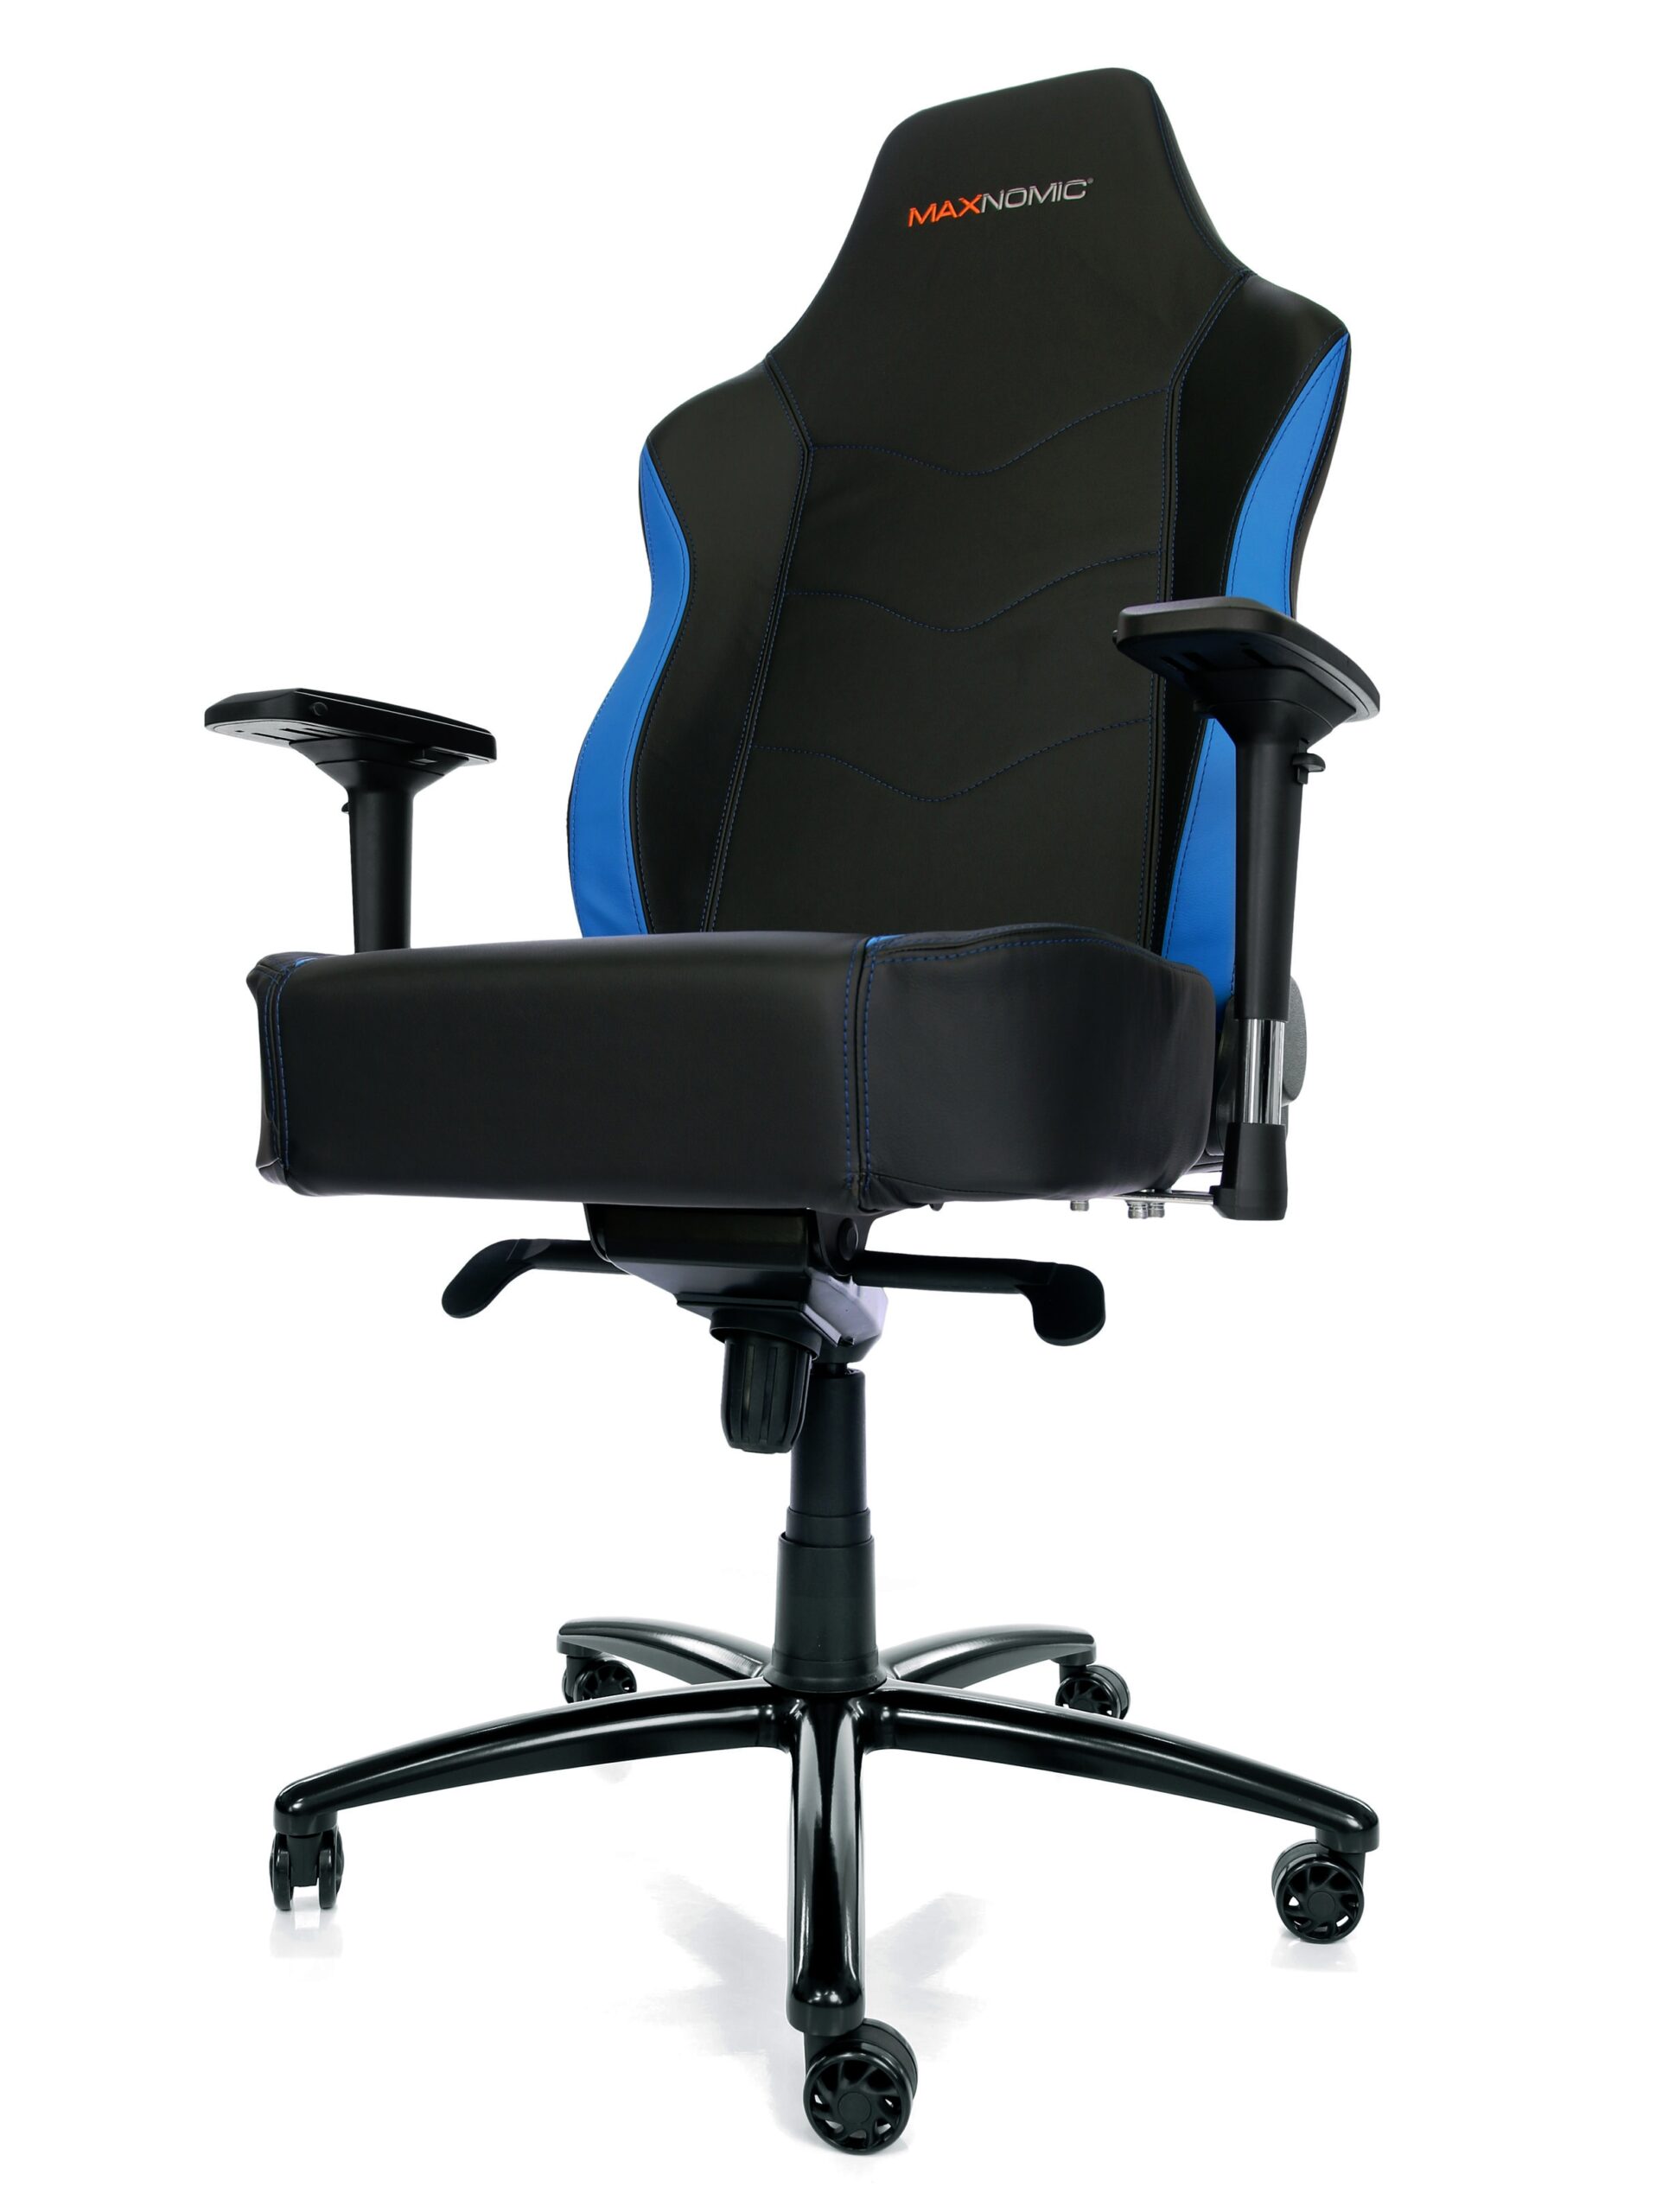 Bürostuhl Modell Maxnomic® Titanus Blau leicht nach links gedreht.